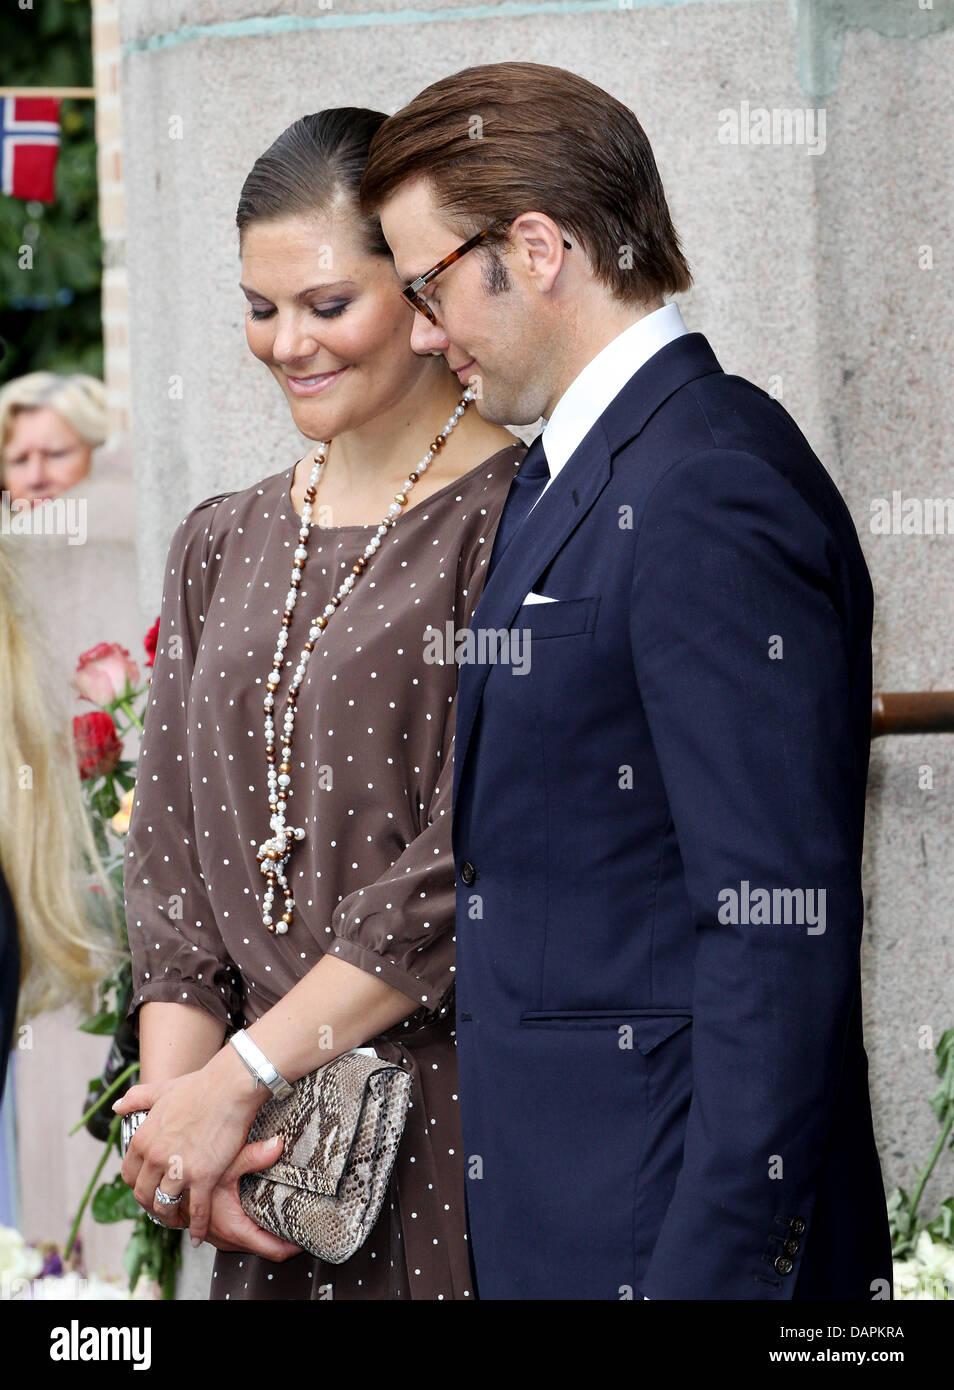 crown-princess-victoria-of-sweden-and-prince-daniel-attend-the-celebrations-DAPKRA.jpg